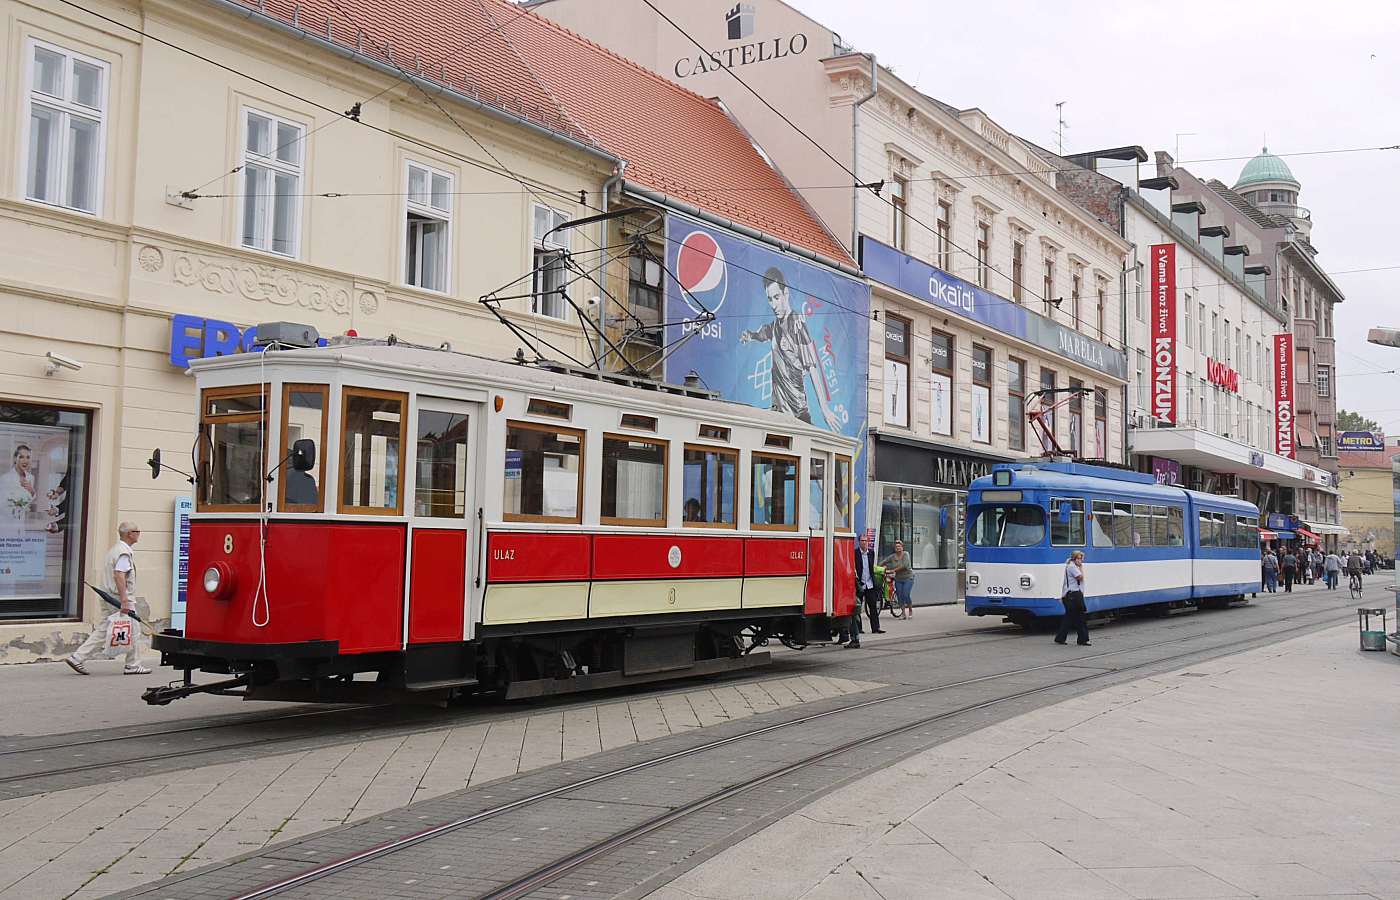 Historic tram #8